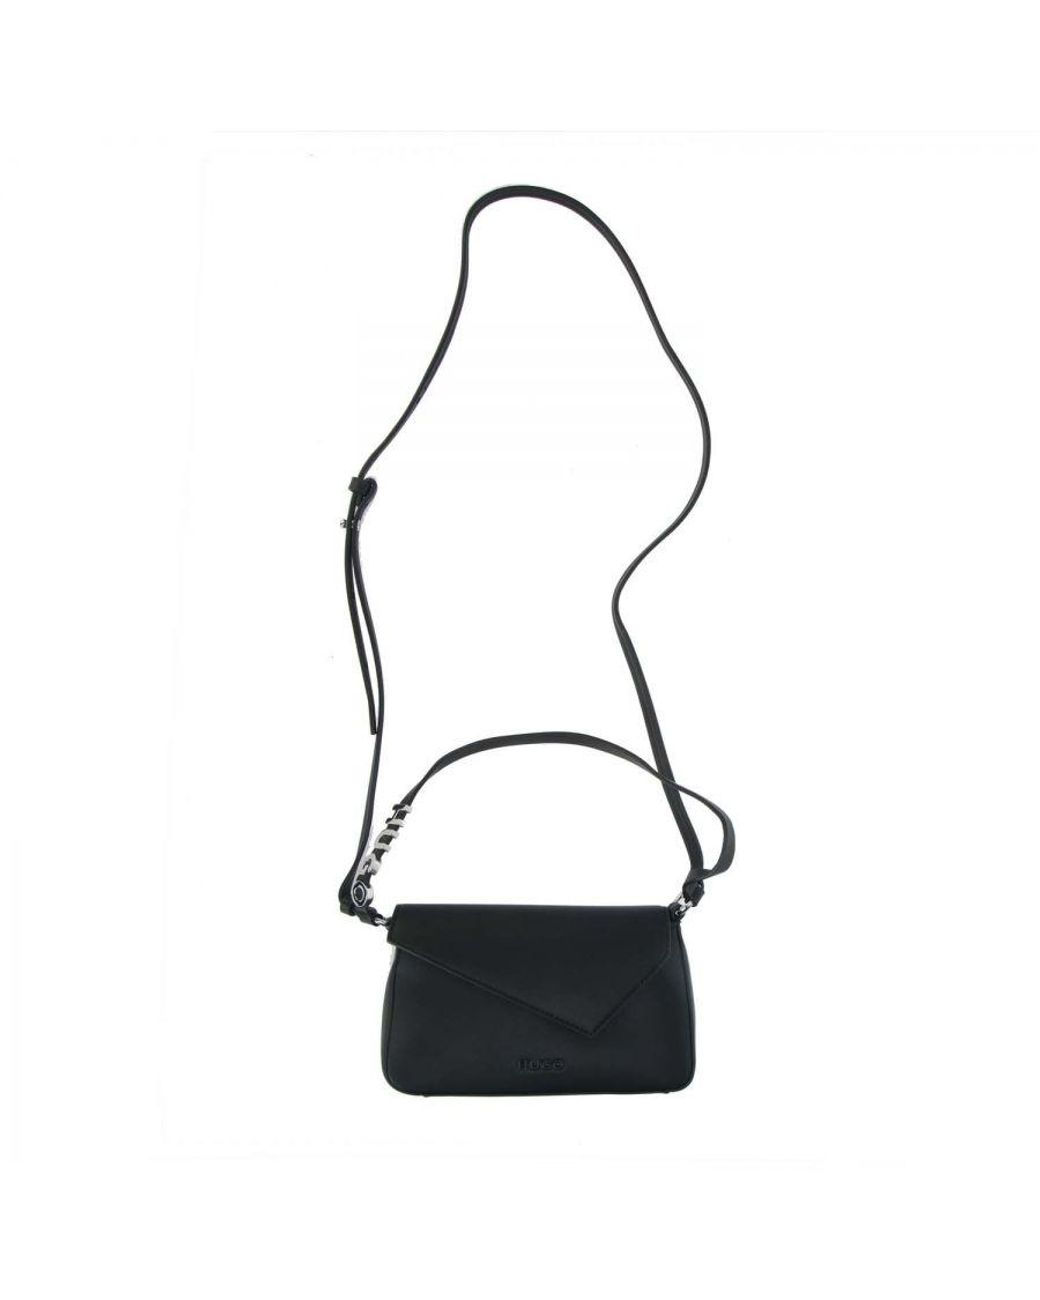 BOSS by Lyst UK in Shoulder BOSS HUGO Mel White Accessories | Bag